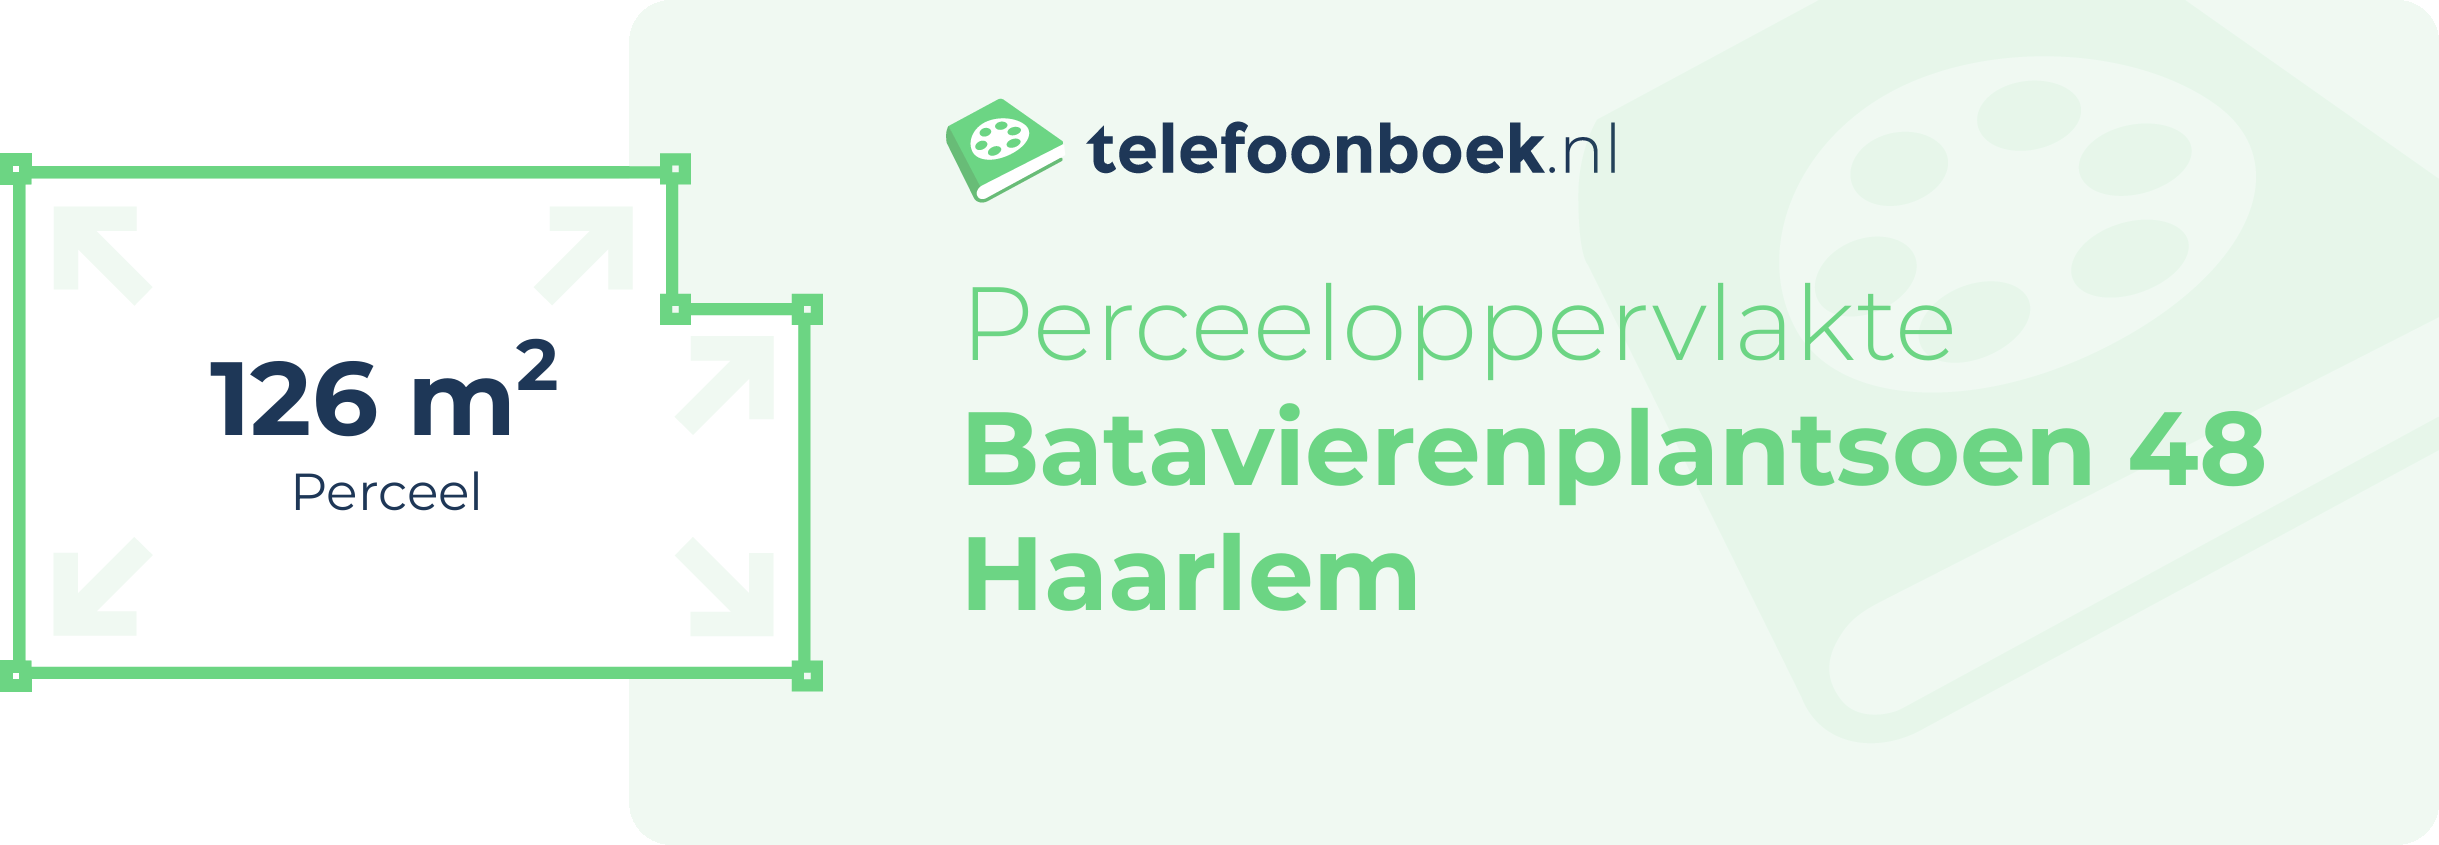 Perceeloppervlakte Batavierenplantsoen 48 Haarlem